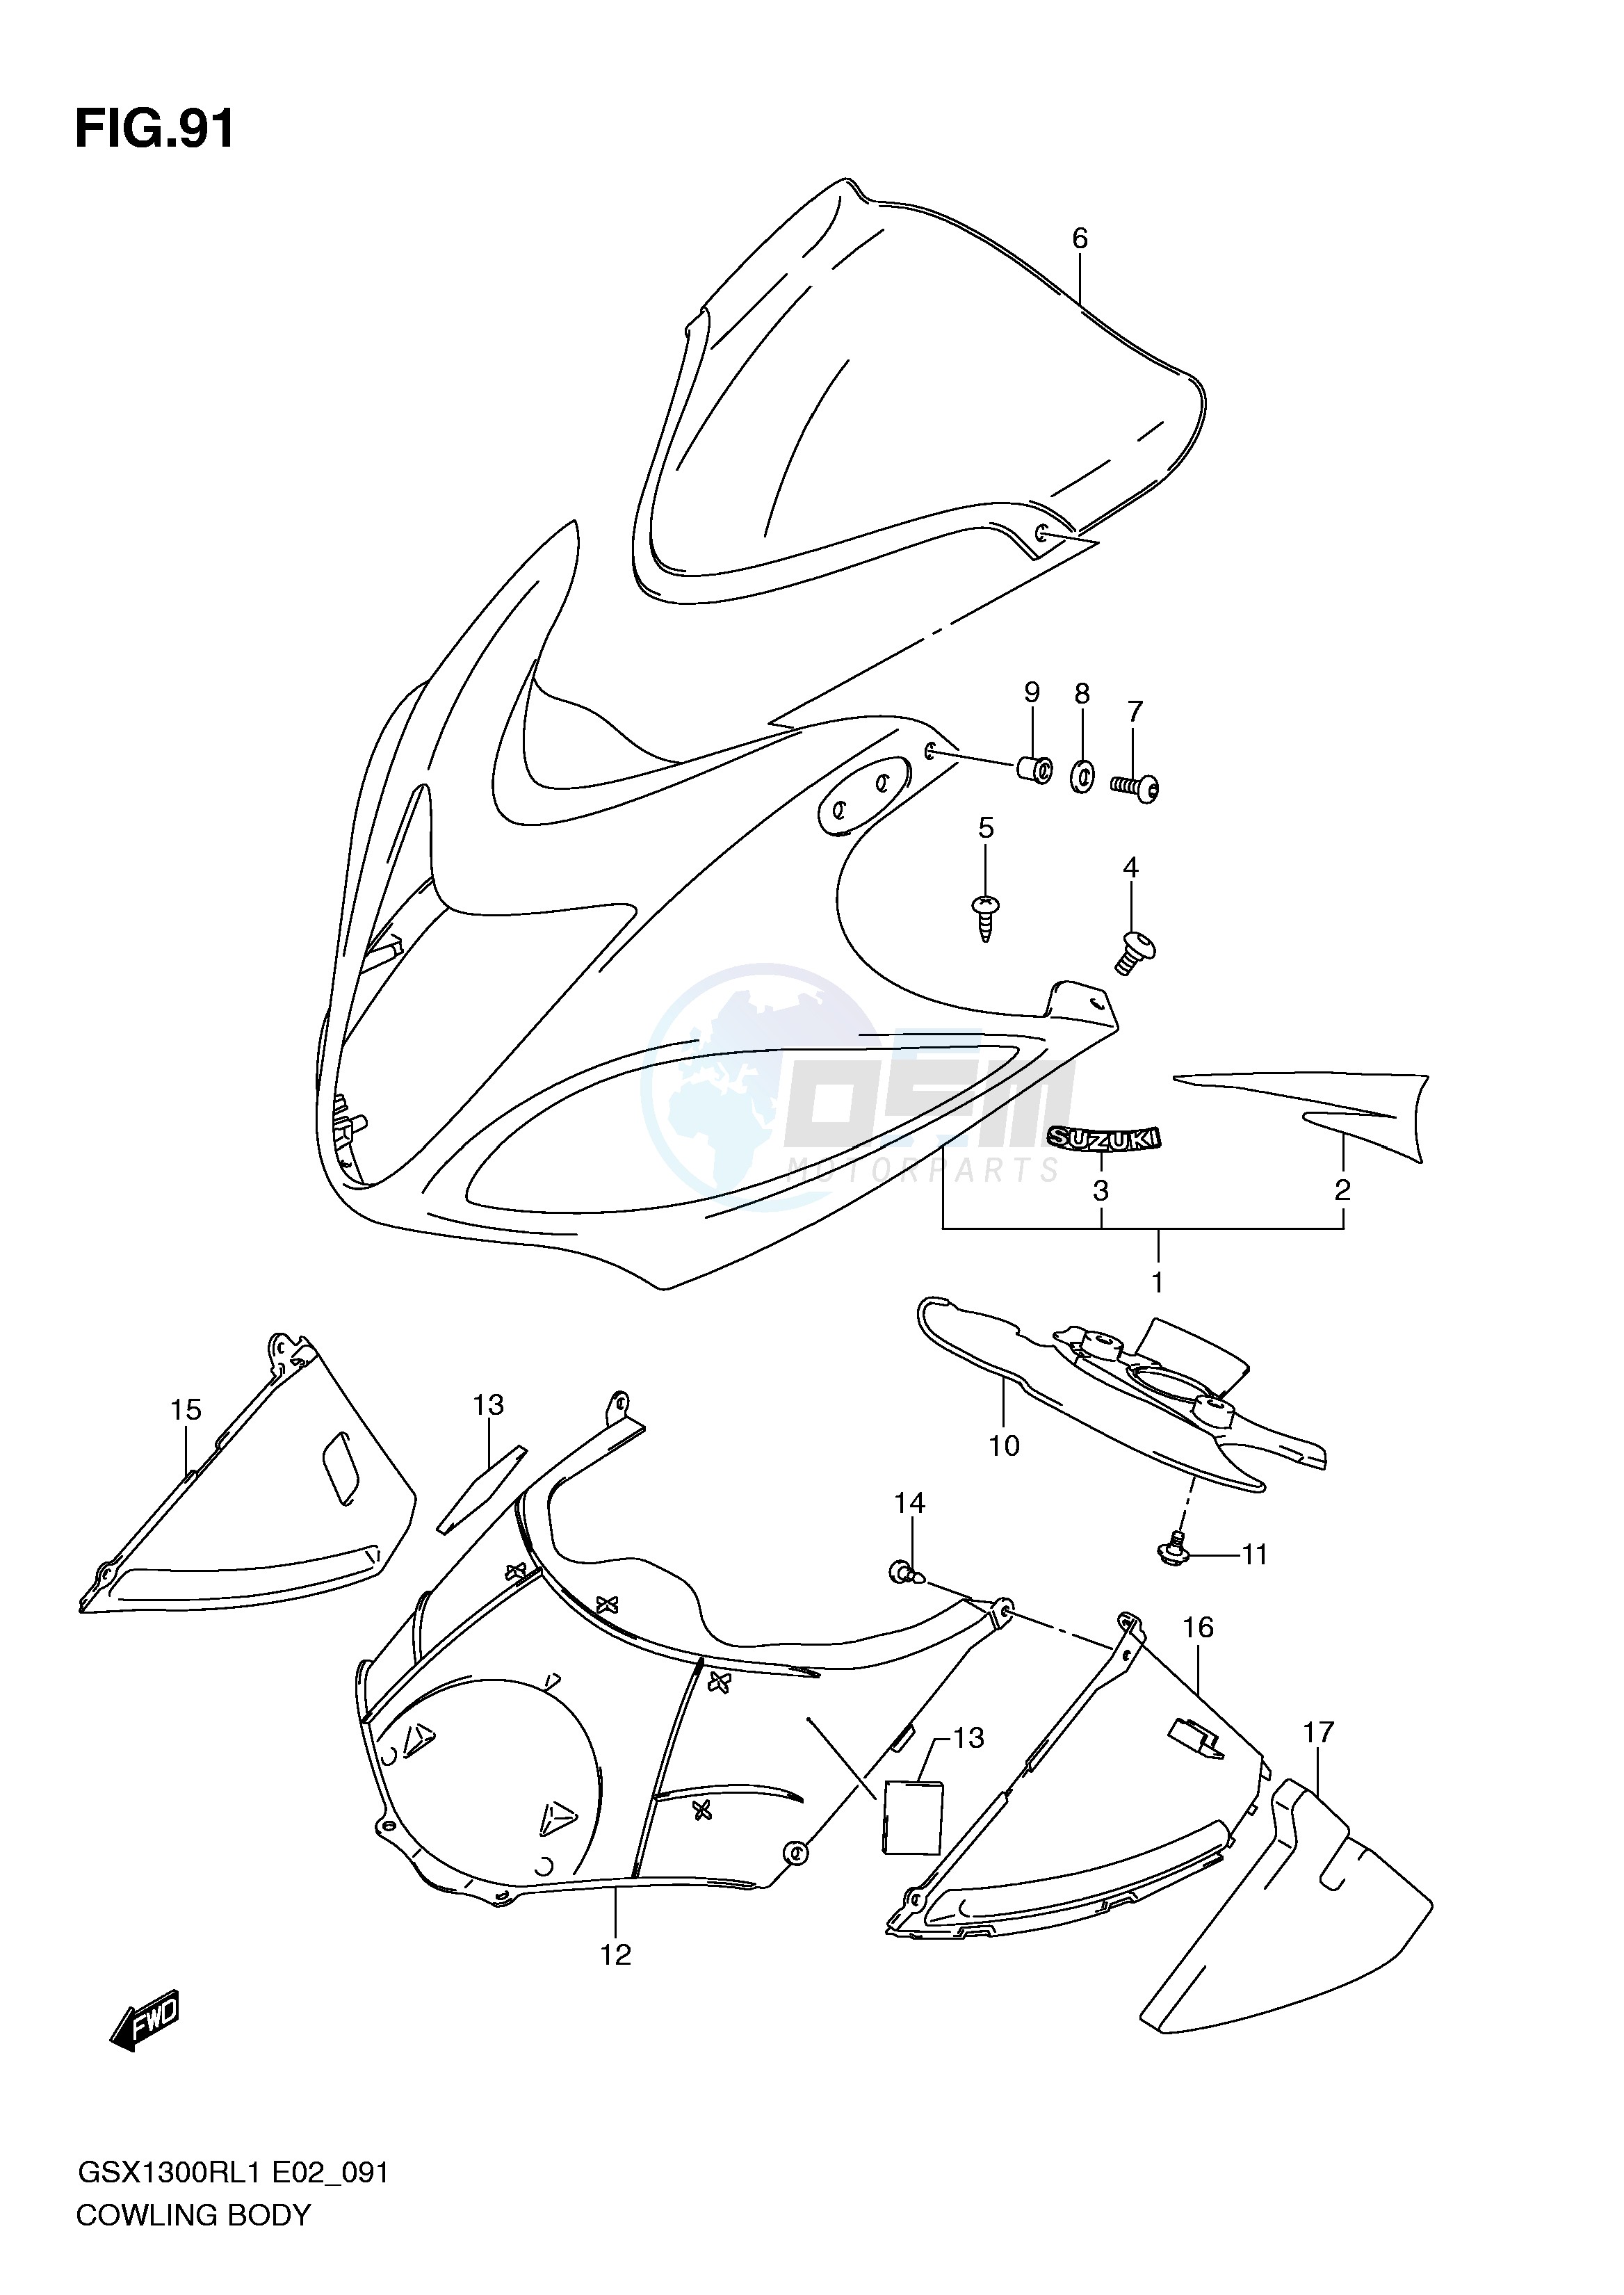 COWLING BODY (GSX1300RL1 E14) blueprint